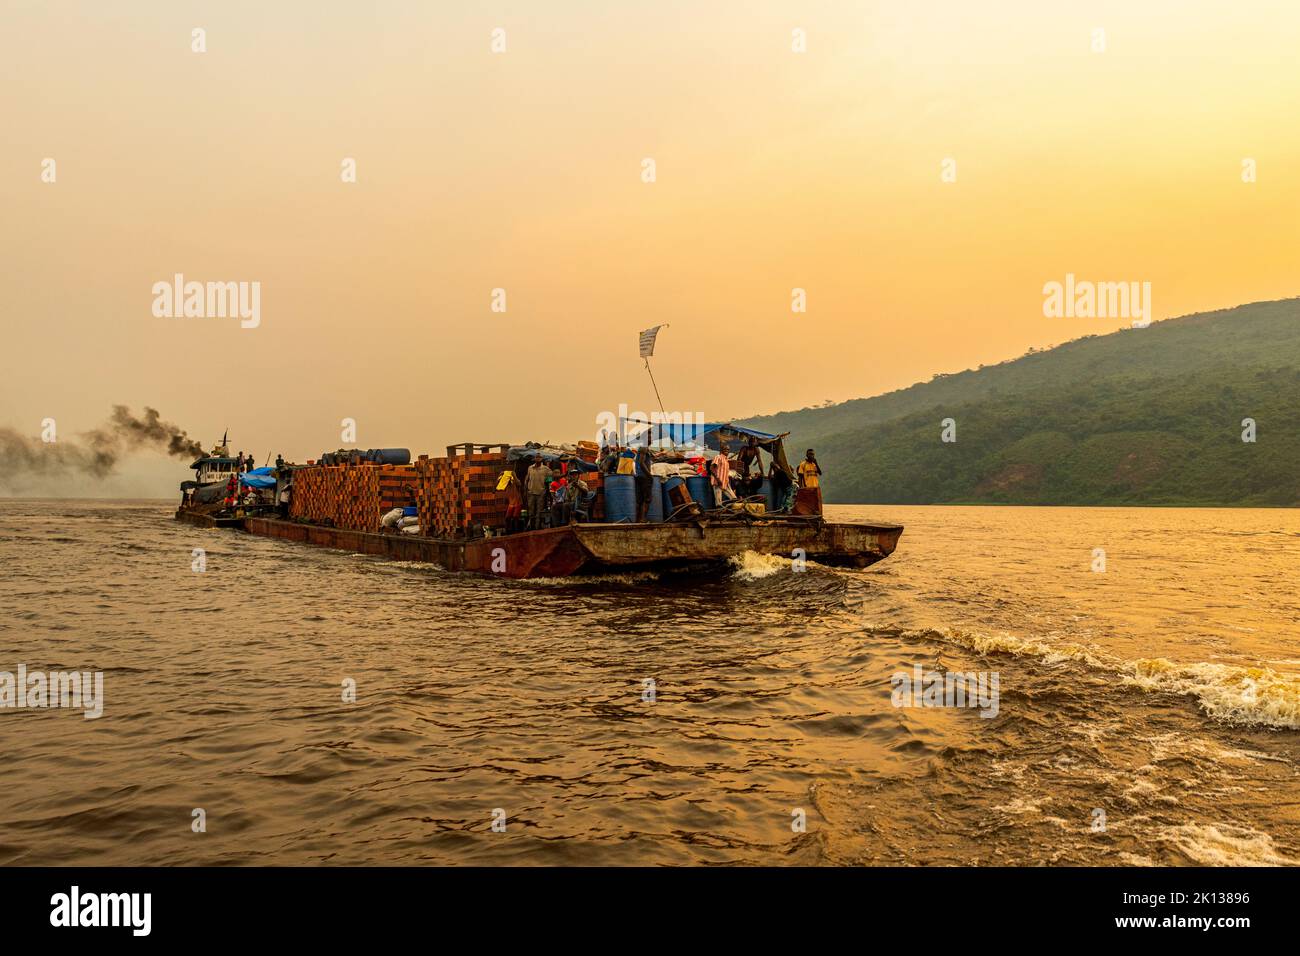 Überladenes Flussboot auf dem Kongo-Fluss bei Sonnenuntergang, Demokratische Republik Kongo, Afrika Stockfoto